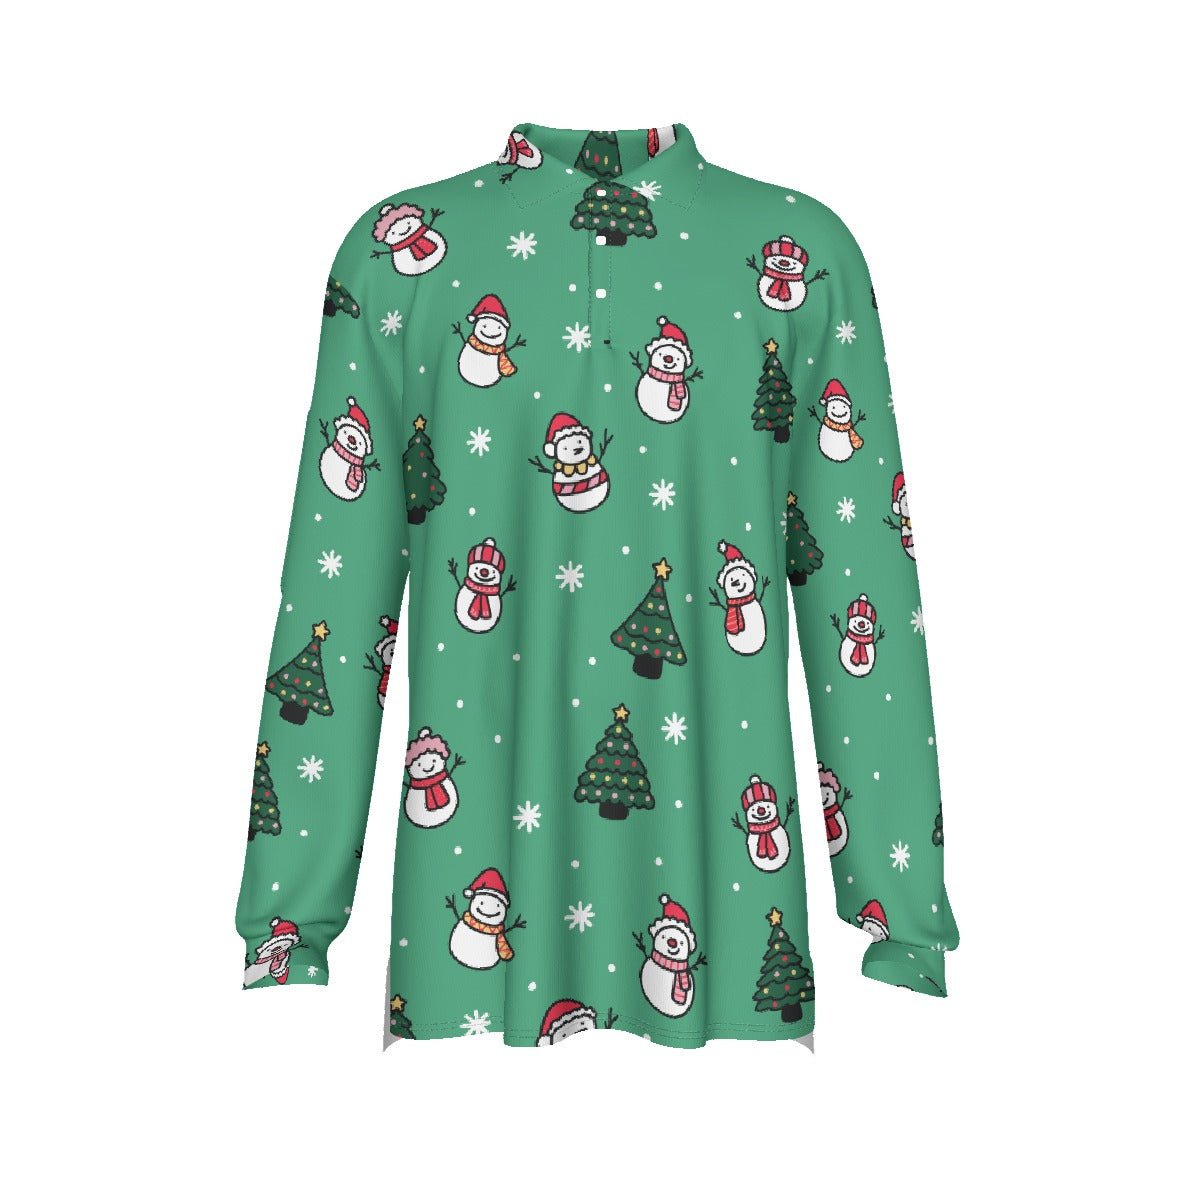 Men's Long Sleeve Christmas Polo Shirt- Green Snowman - Festive Style